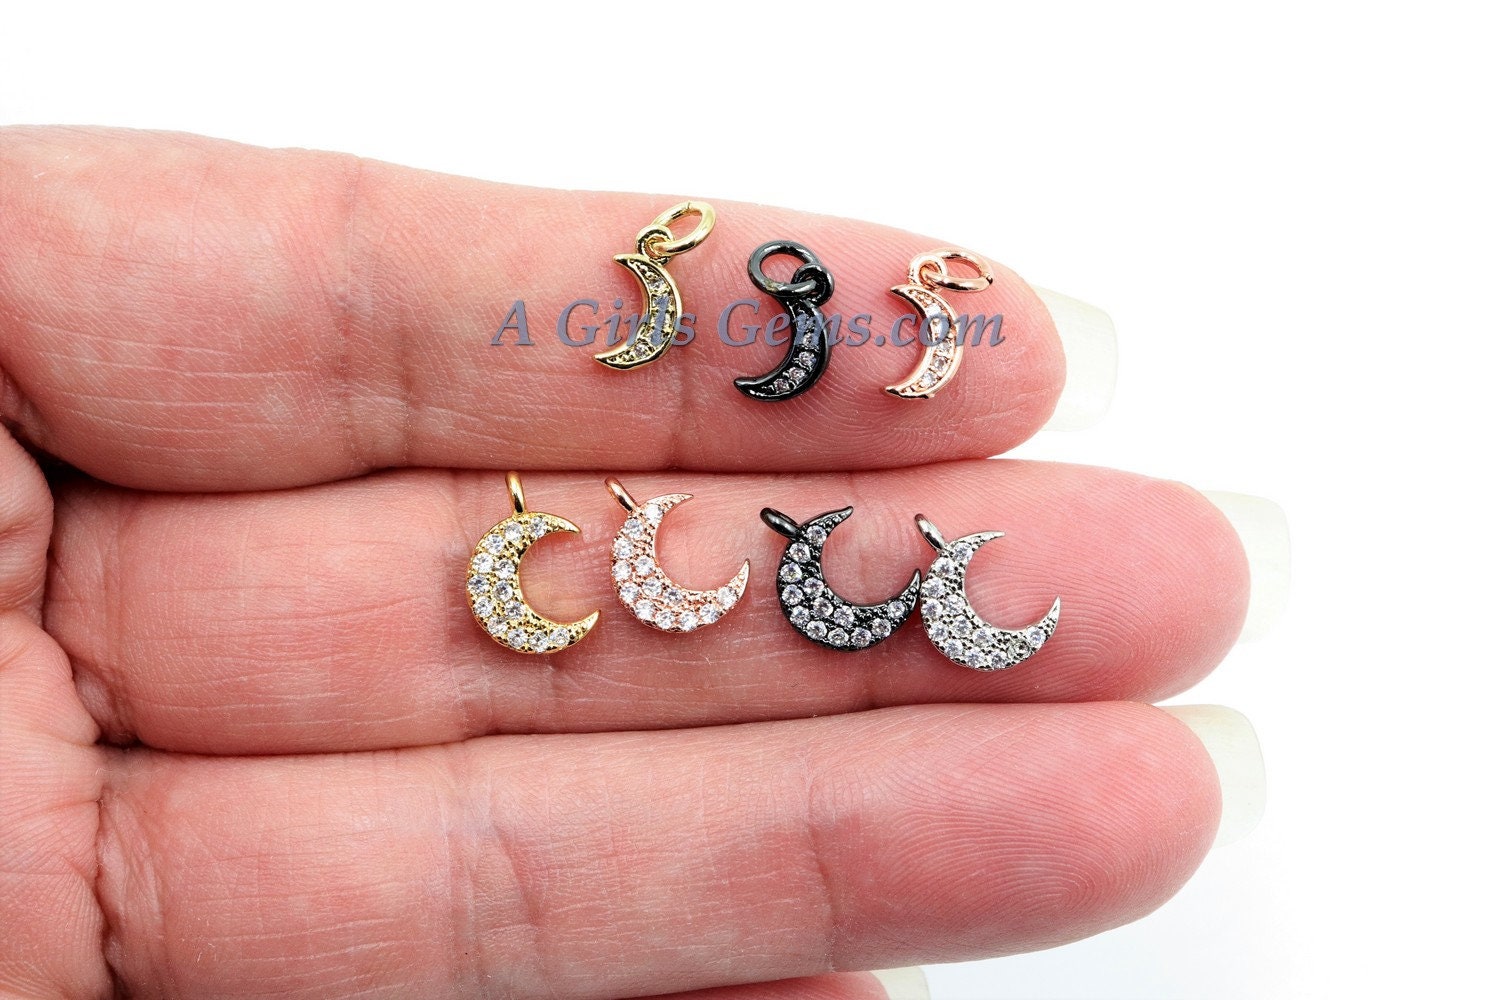 CZ Tiny Crescent Moon Charm, 3 pcs Mini Moon Charms, Dainty CZ Moon, 8 x 10 mm #26 - A Girls Gems